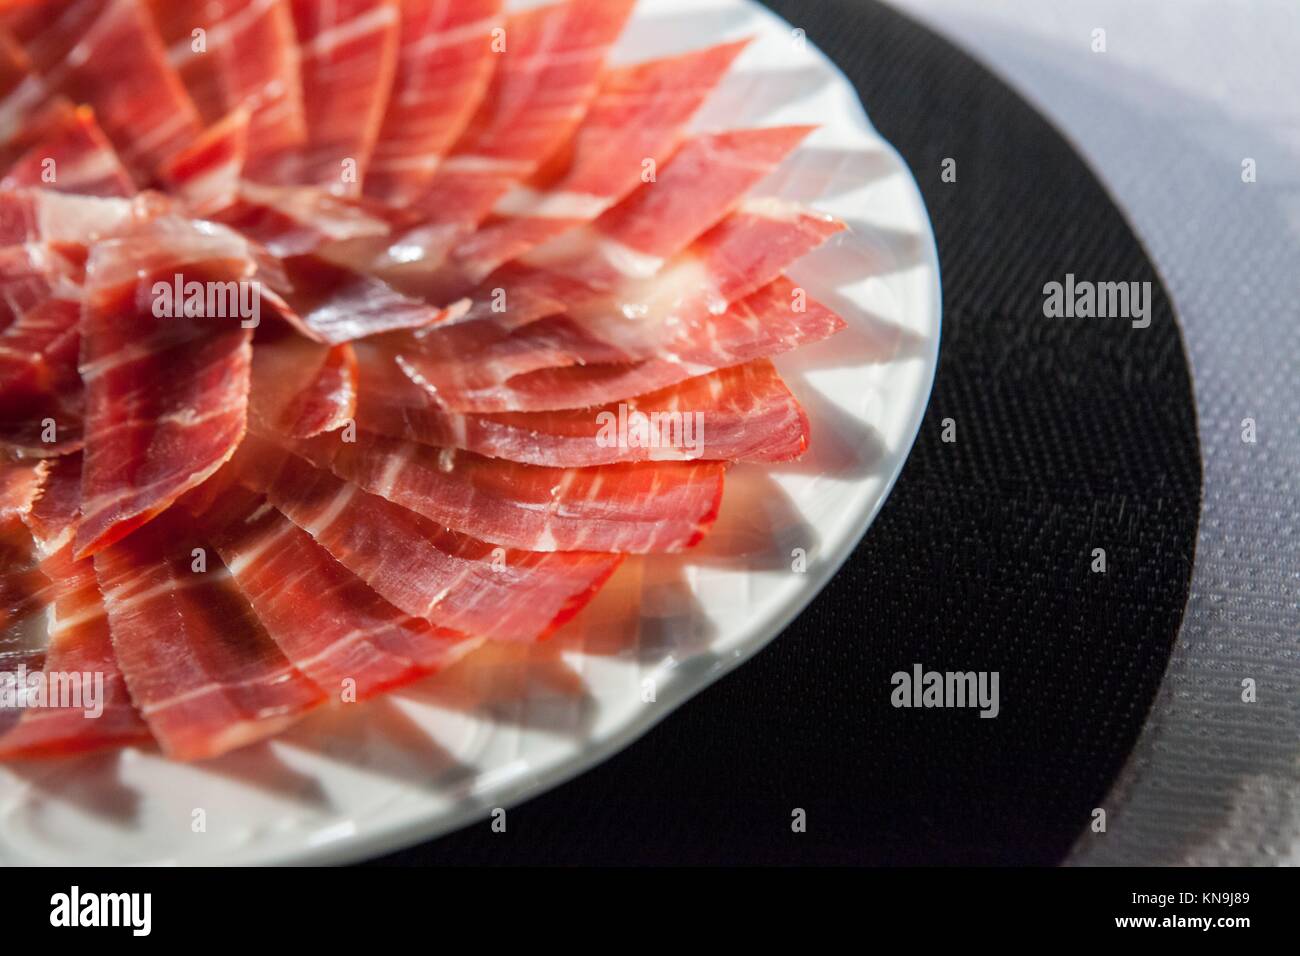 Circular decorative arrangement of iberian cured ham on plate. Selective focus point. Stock Photo